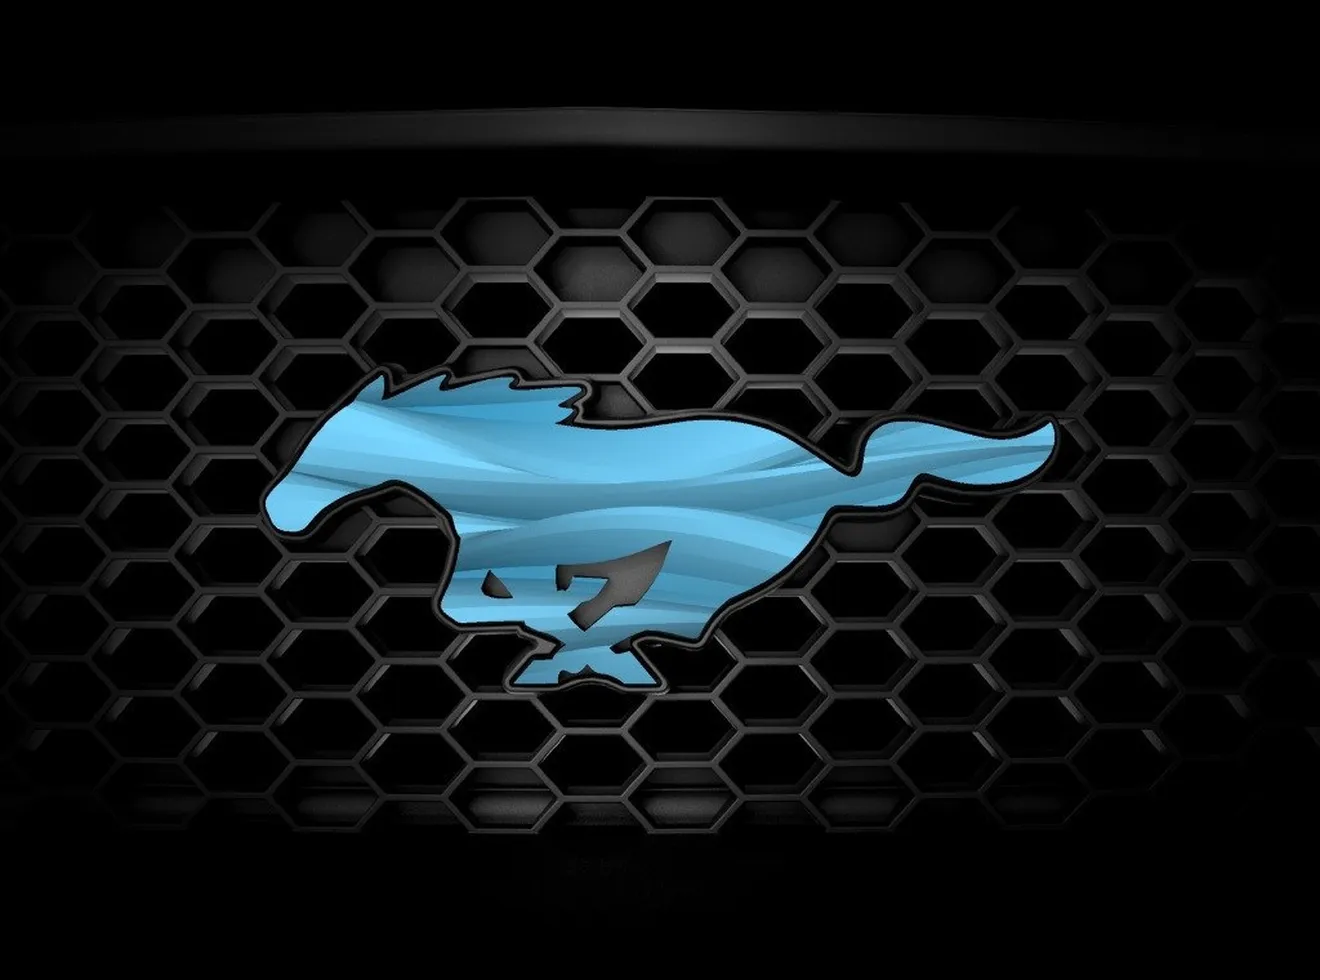 Personaliza tu propio emblema del Ford Mustang